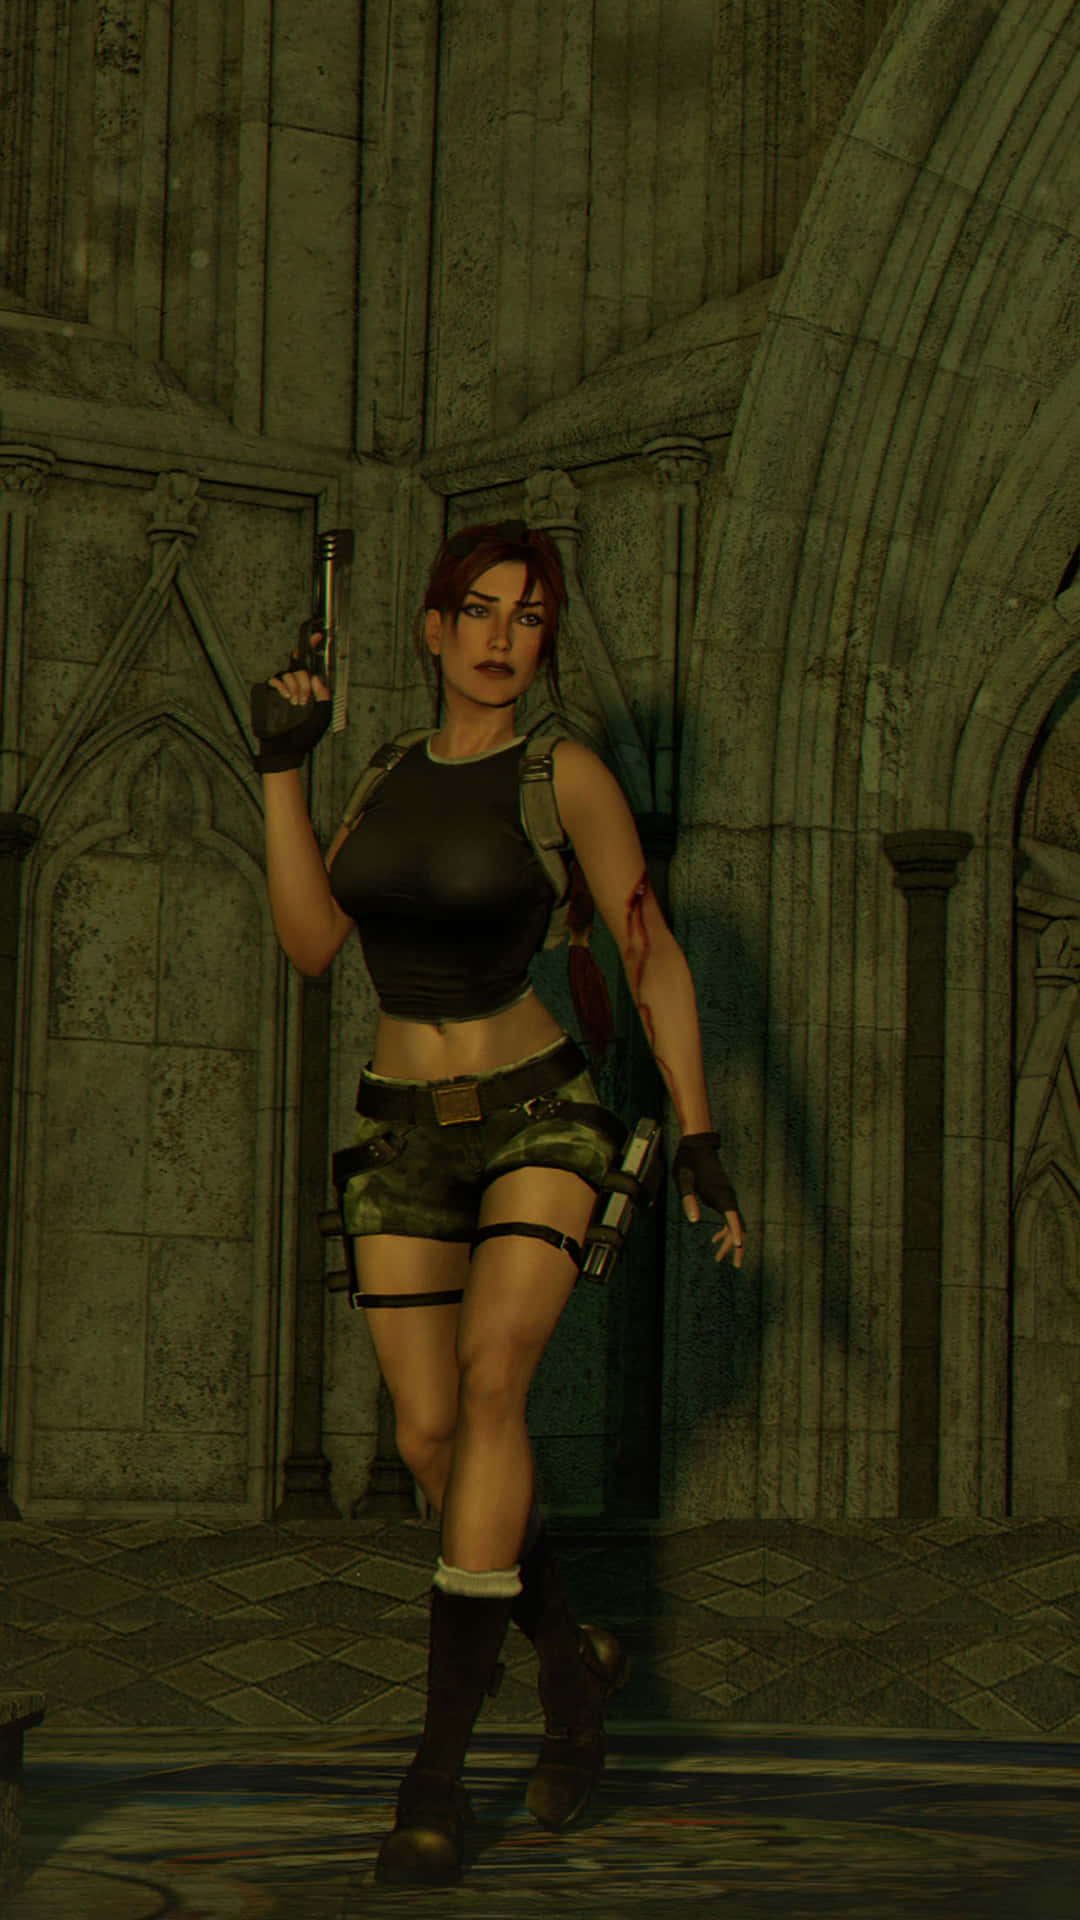 Tombraider Iphone 5s Lara Croft: Tomb Raider Iphone 5s Lara Croft. Wallpaper